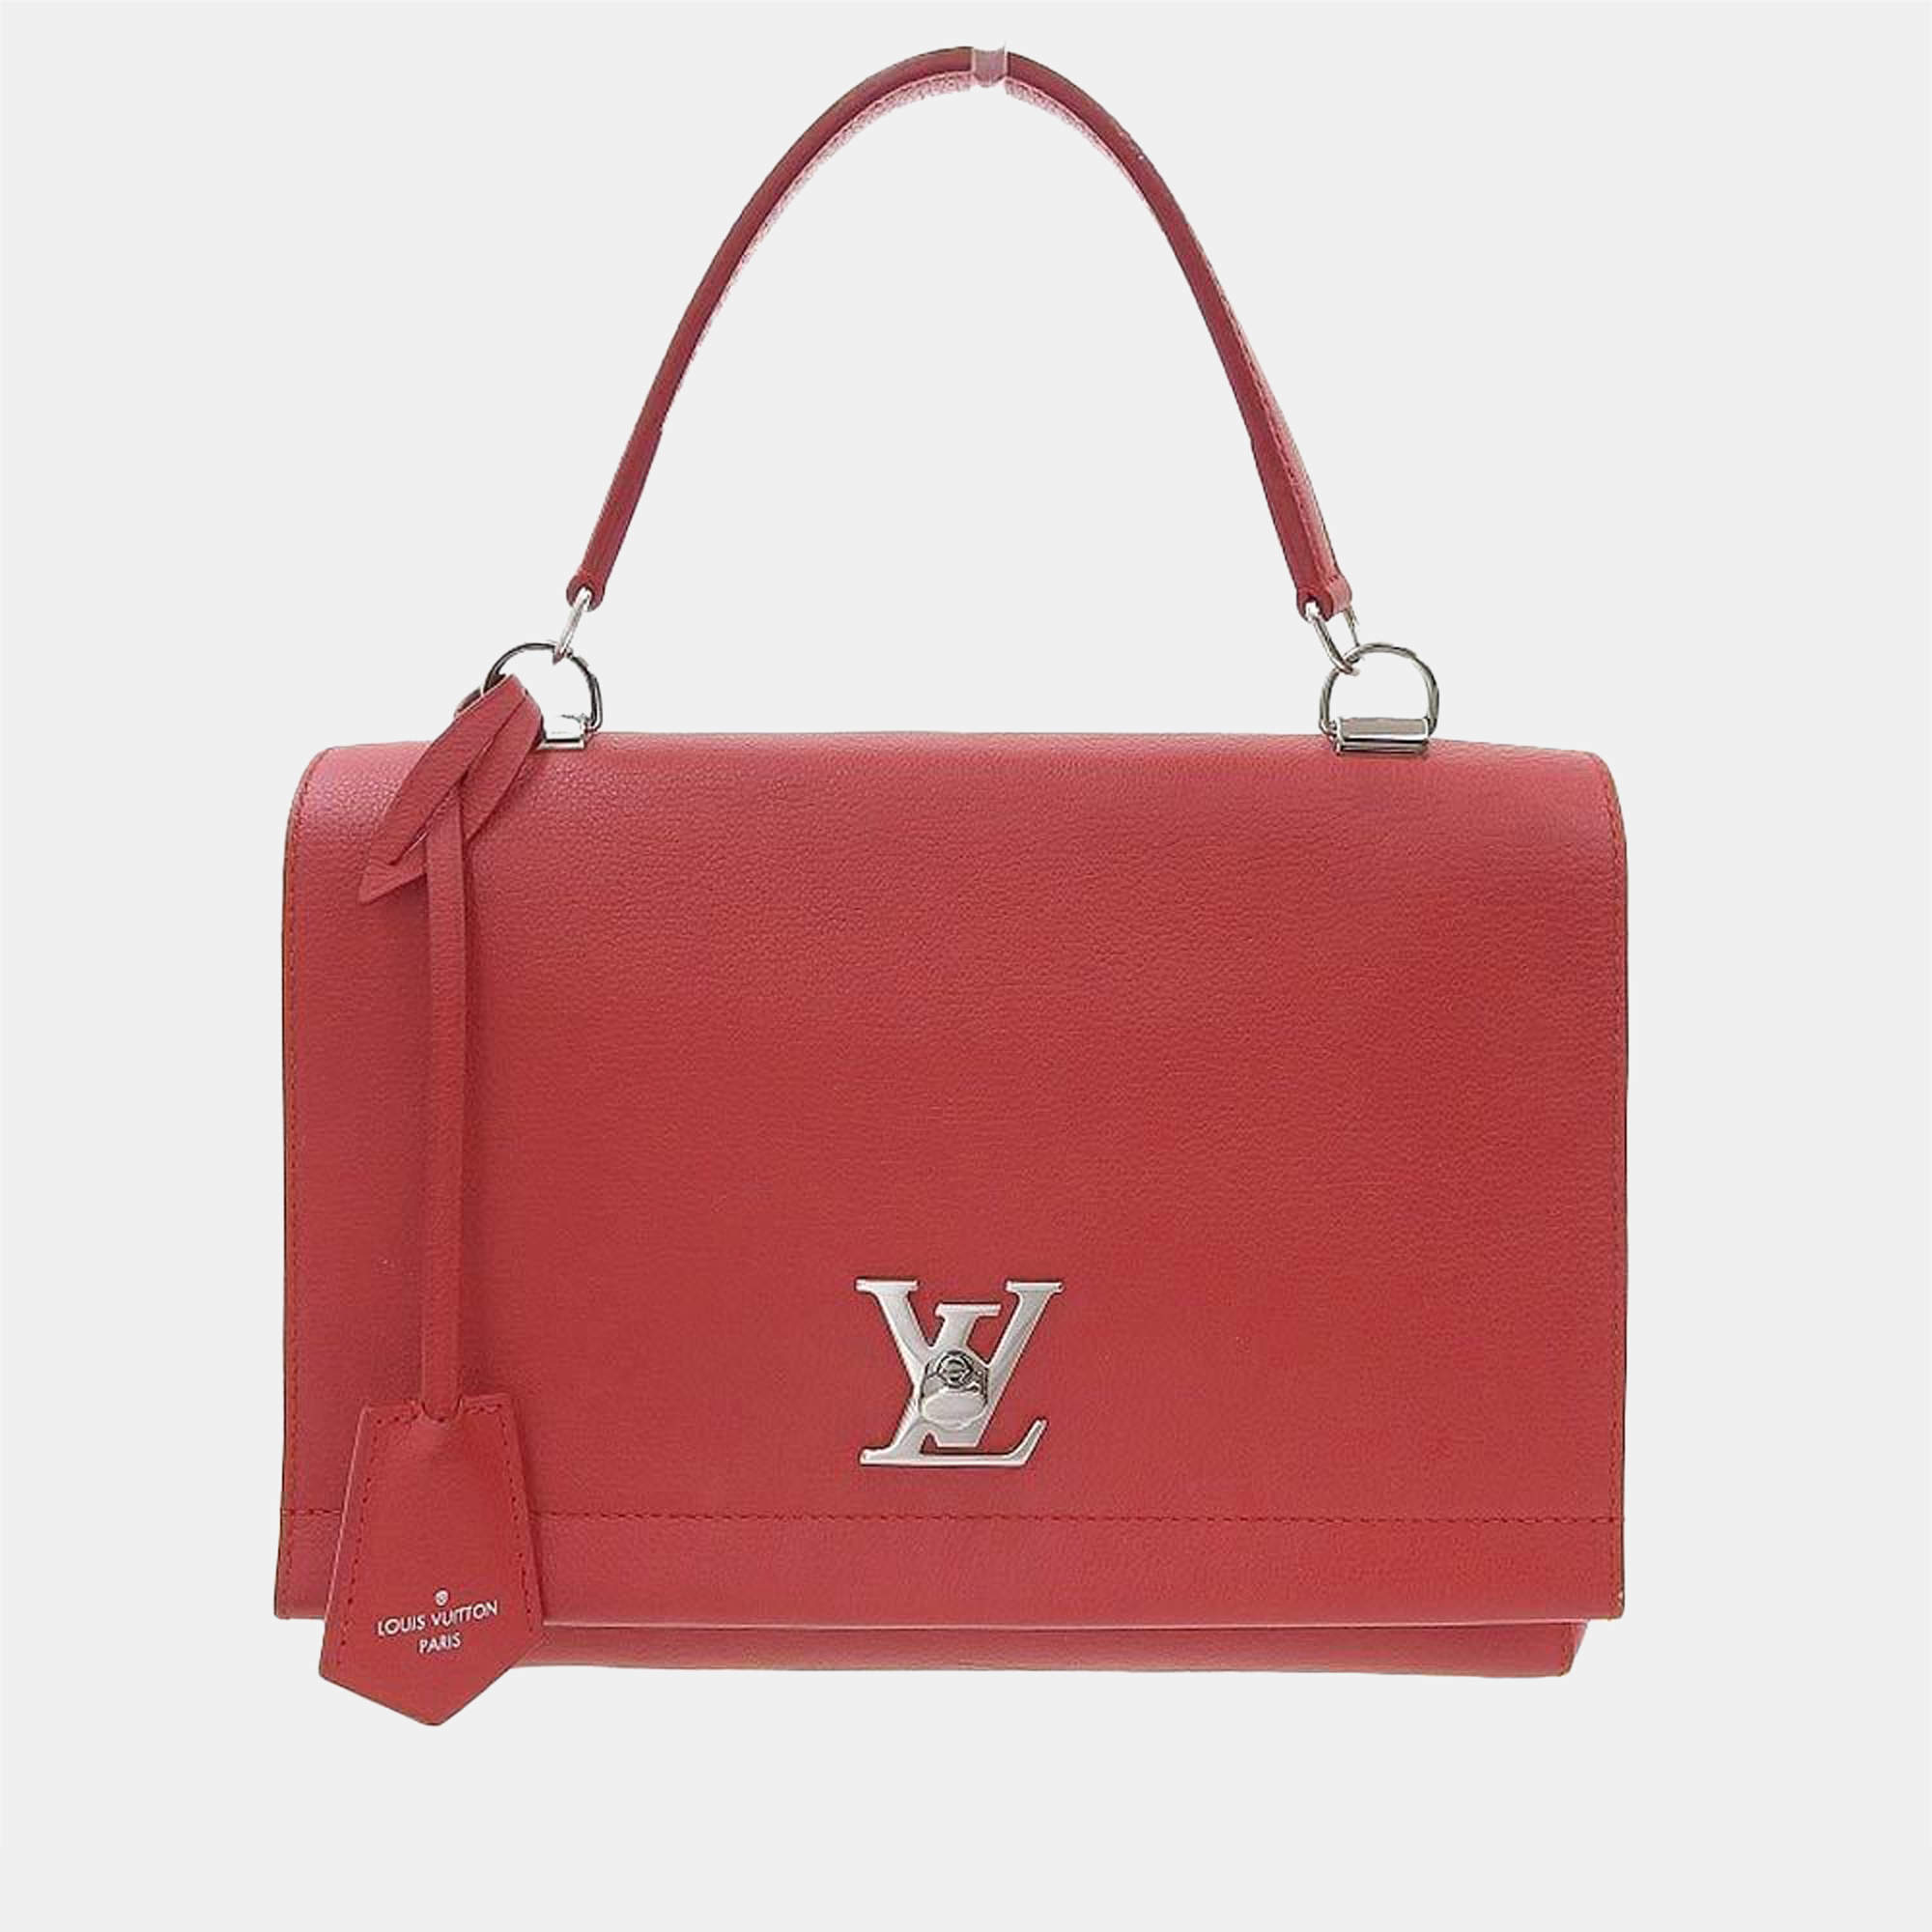 Louis Vuitton Lockme II Calfskin Leather Wallet